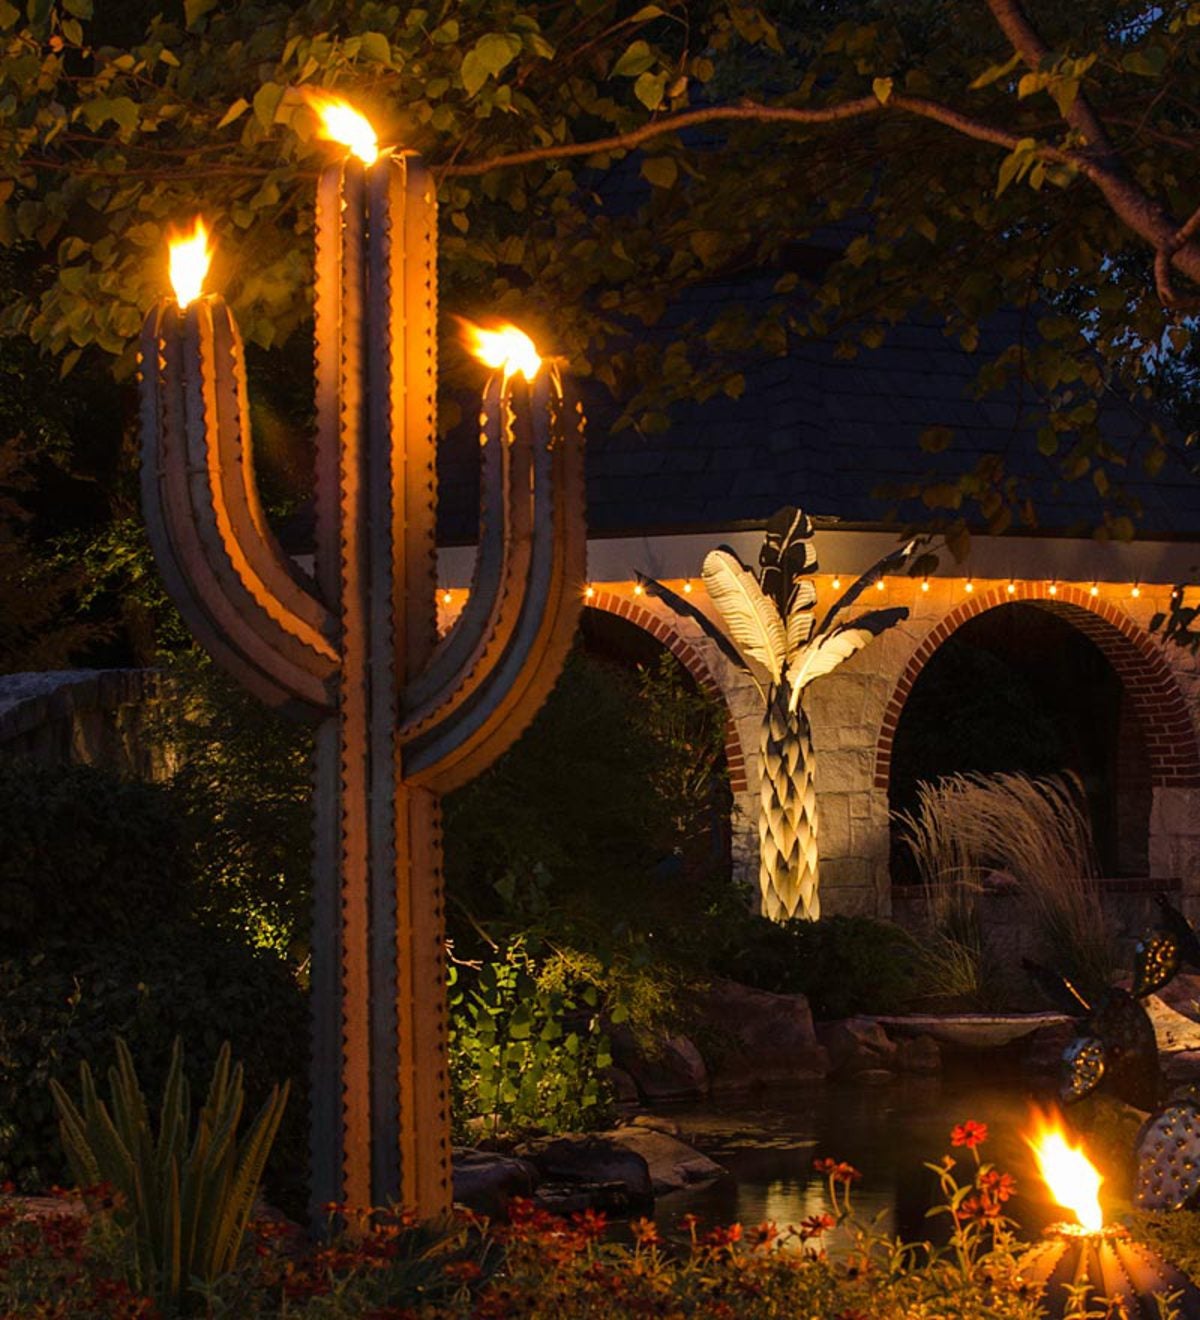 6-1/2 Ft. Saguaro Cactus Outdoor Torch